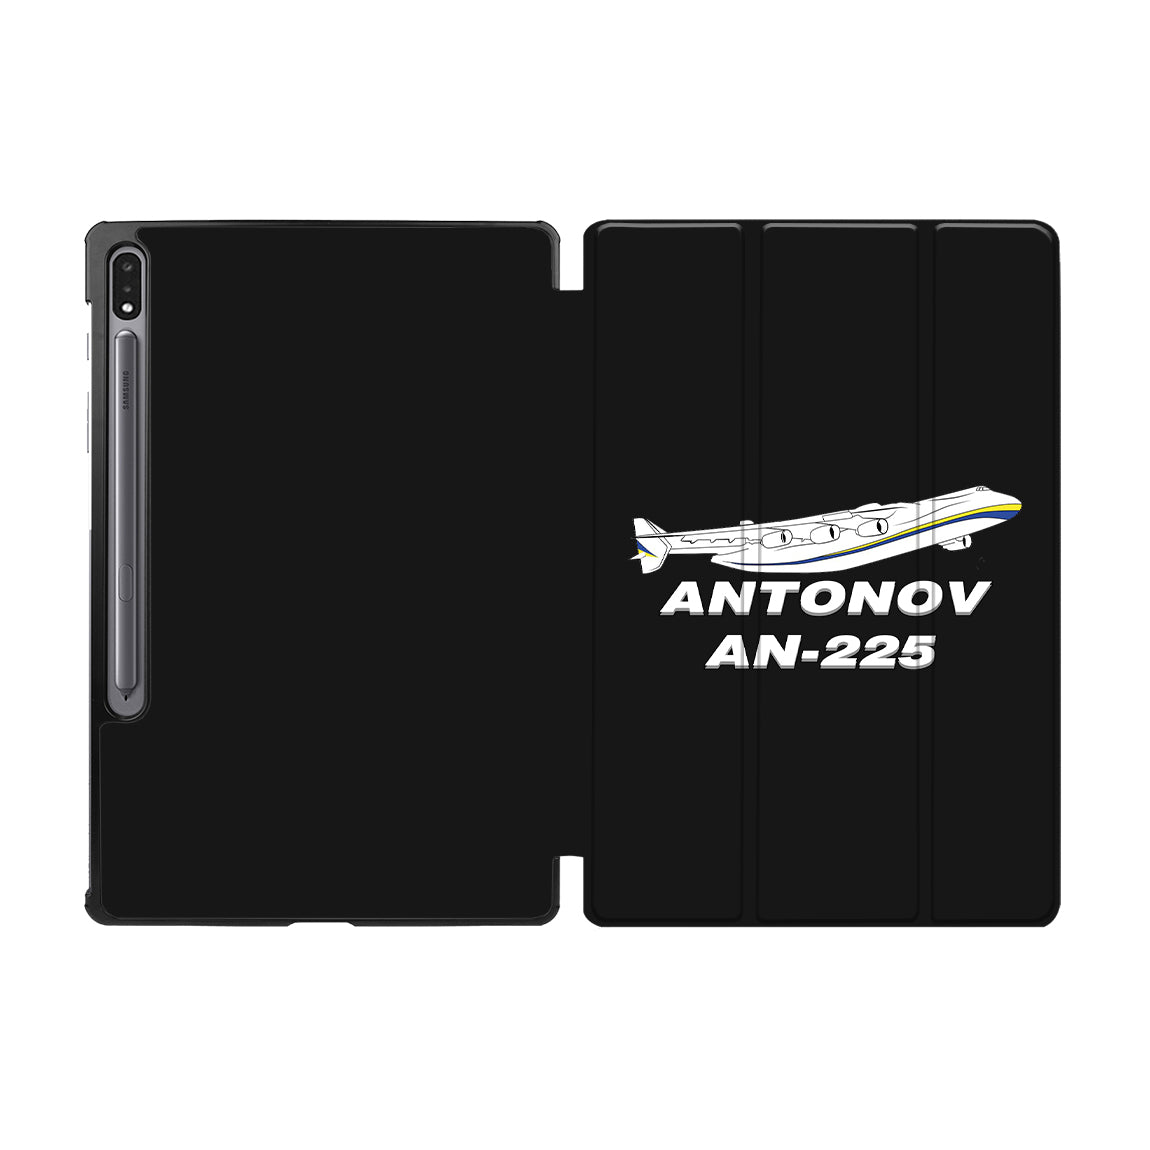 Antonov AN-225 (27) Designed Samsung Tablet Cases